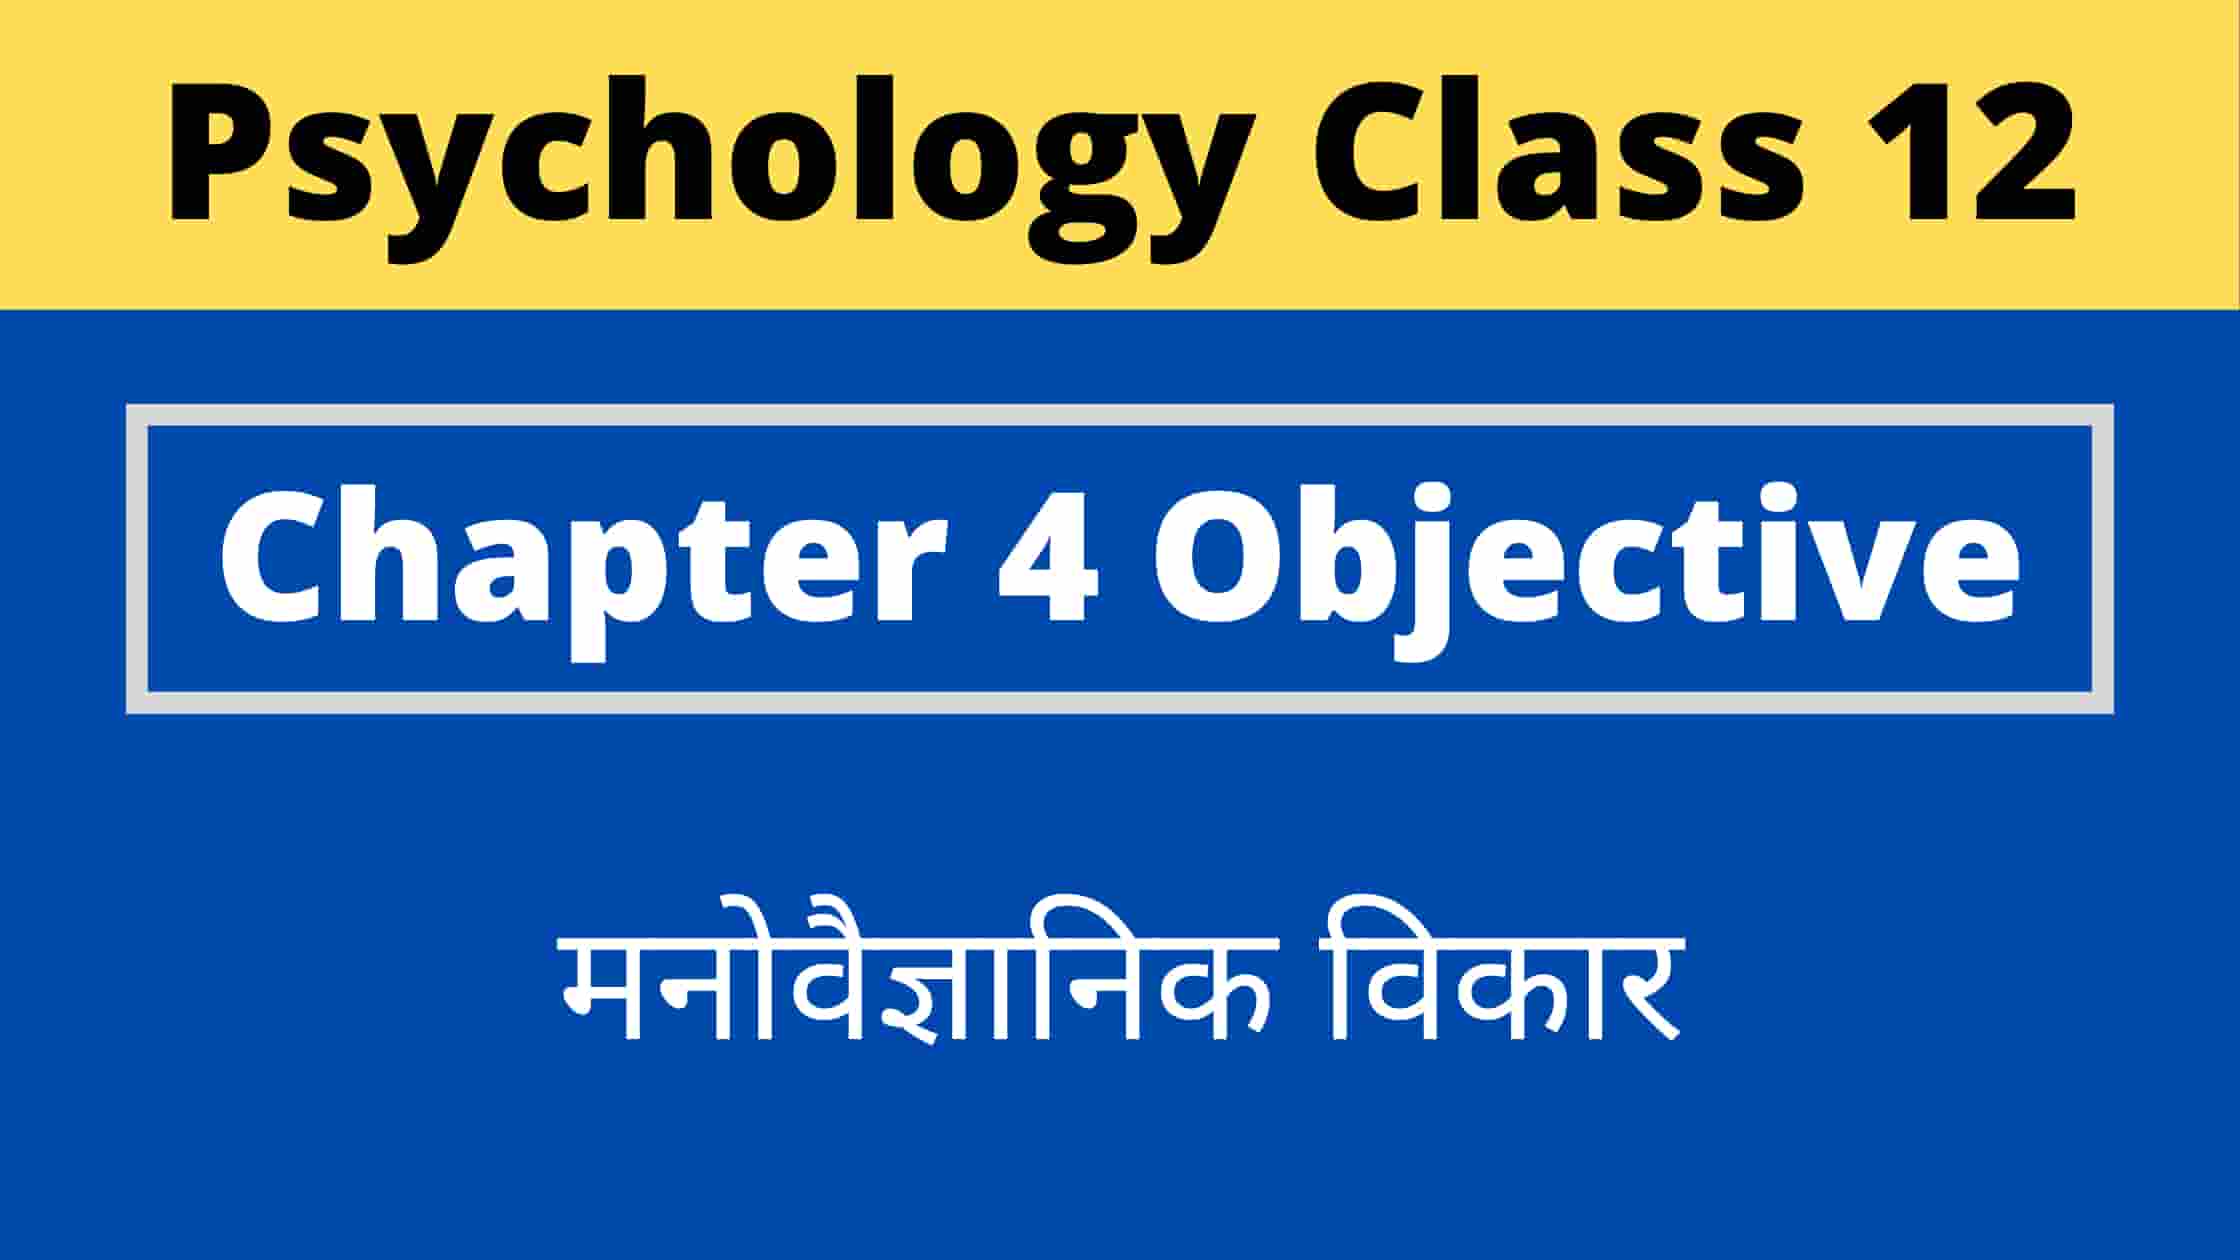 Psychology Class 12 Chapter 4